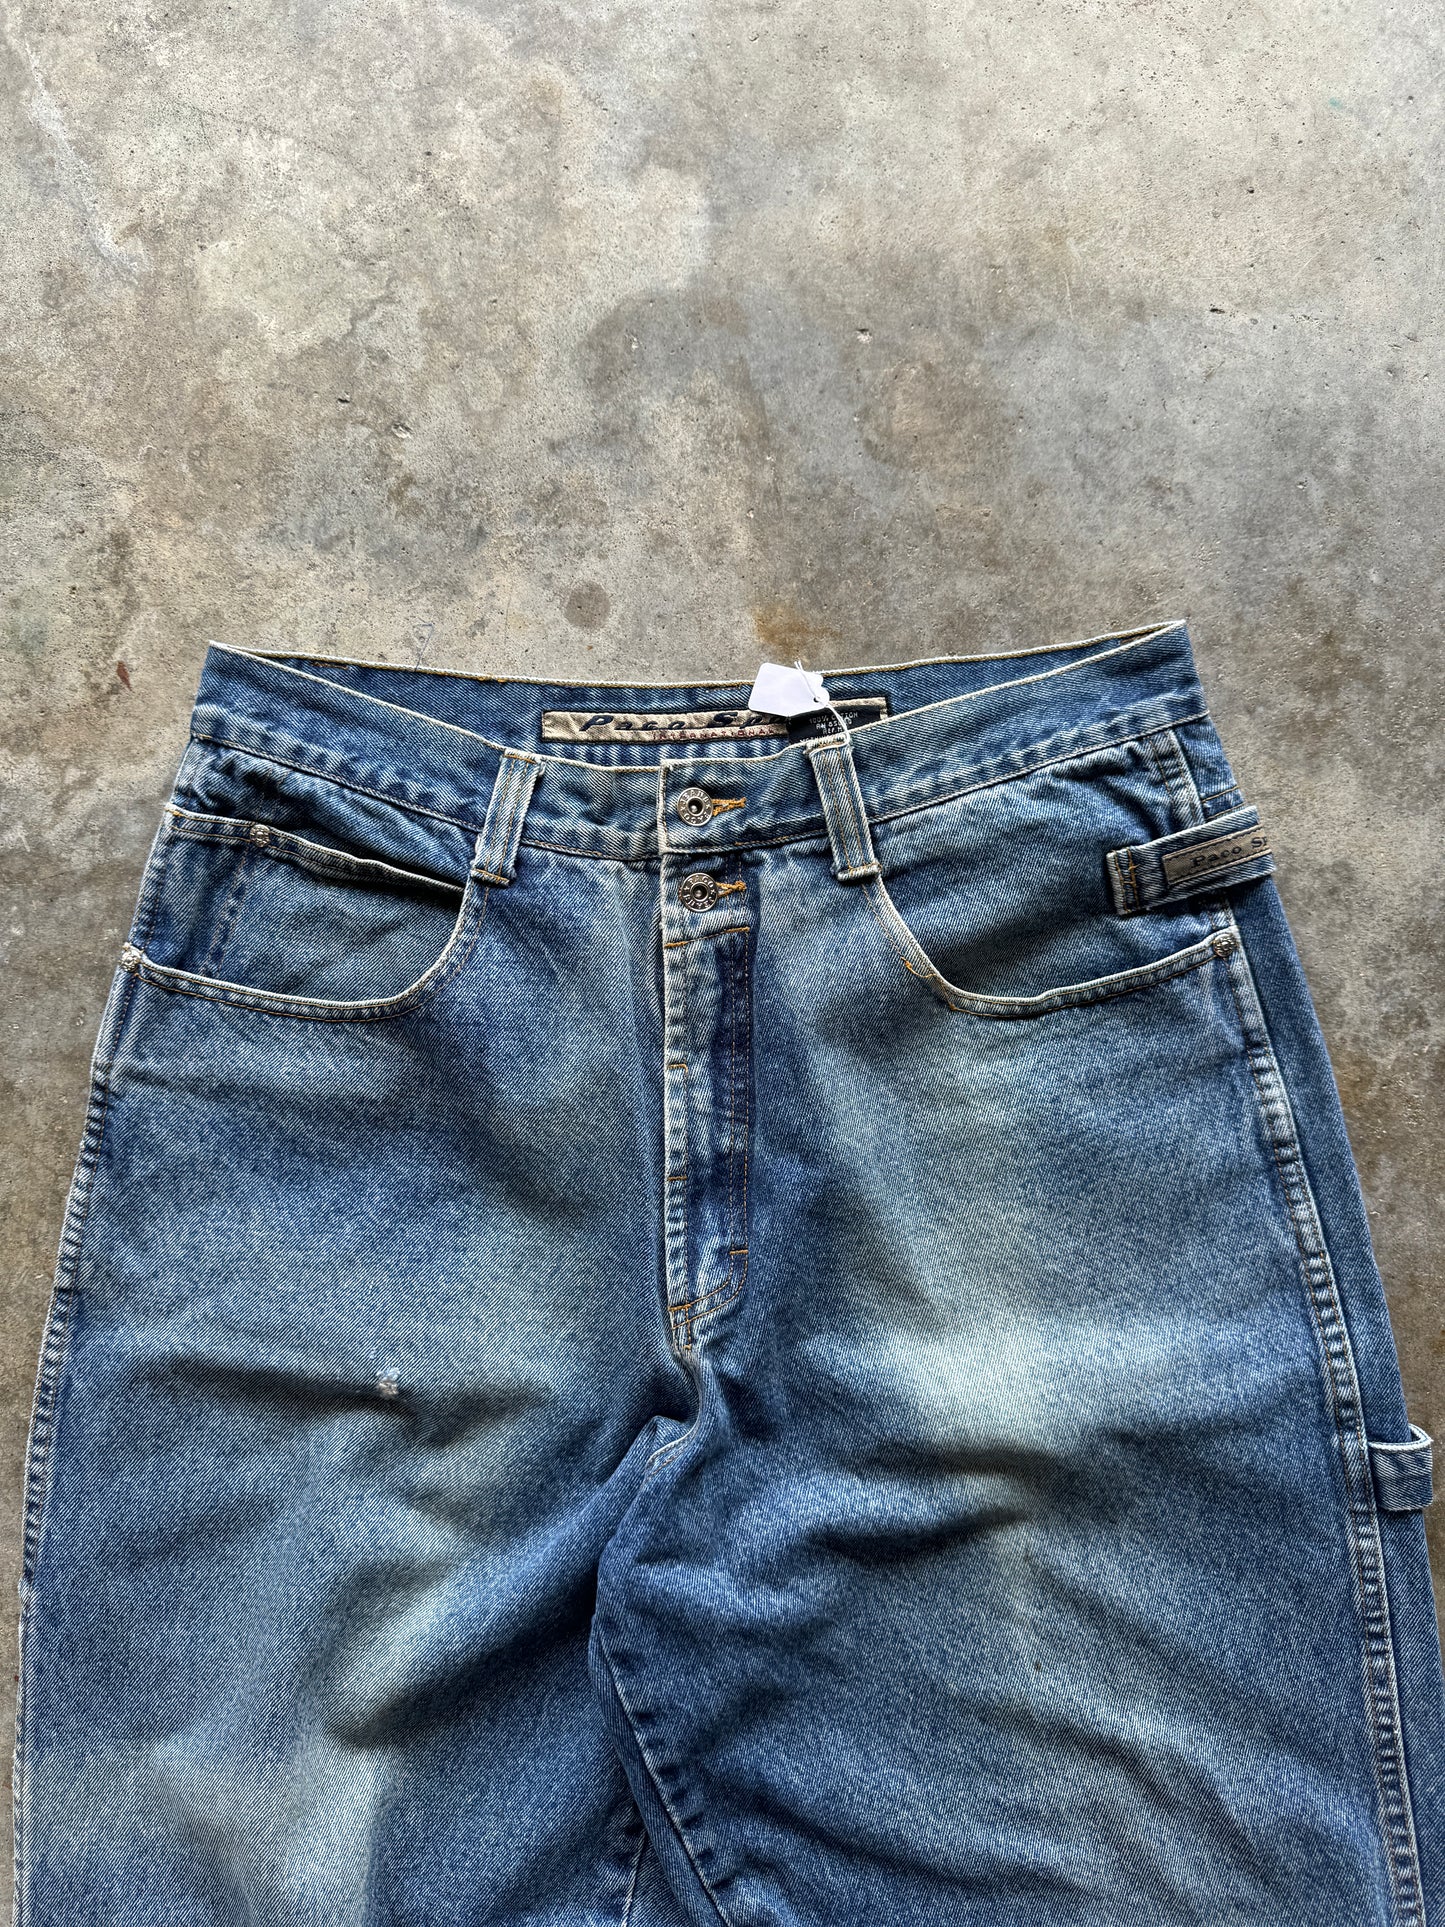 (36 x 30) Paco Sport Denim Jeans